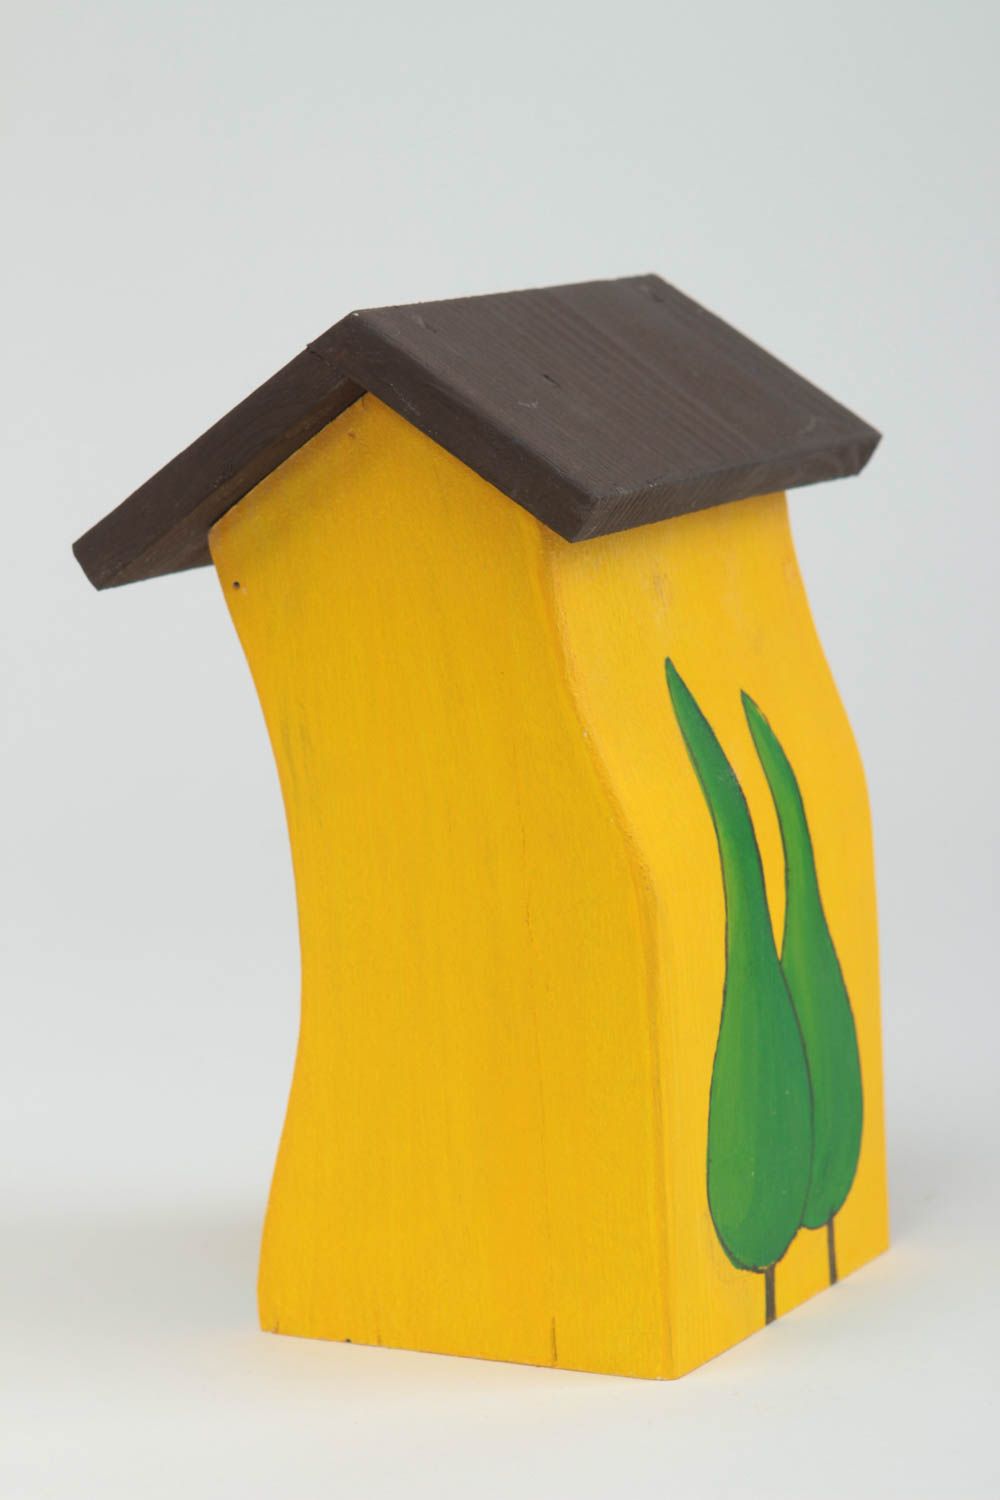 Wooden toy handmade wood sculpture miniature figurines housewarming gift ideas photo 3